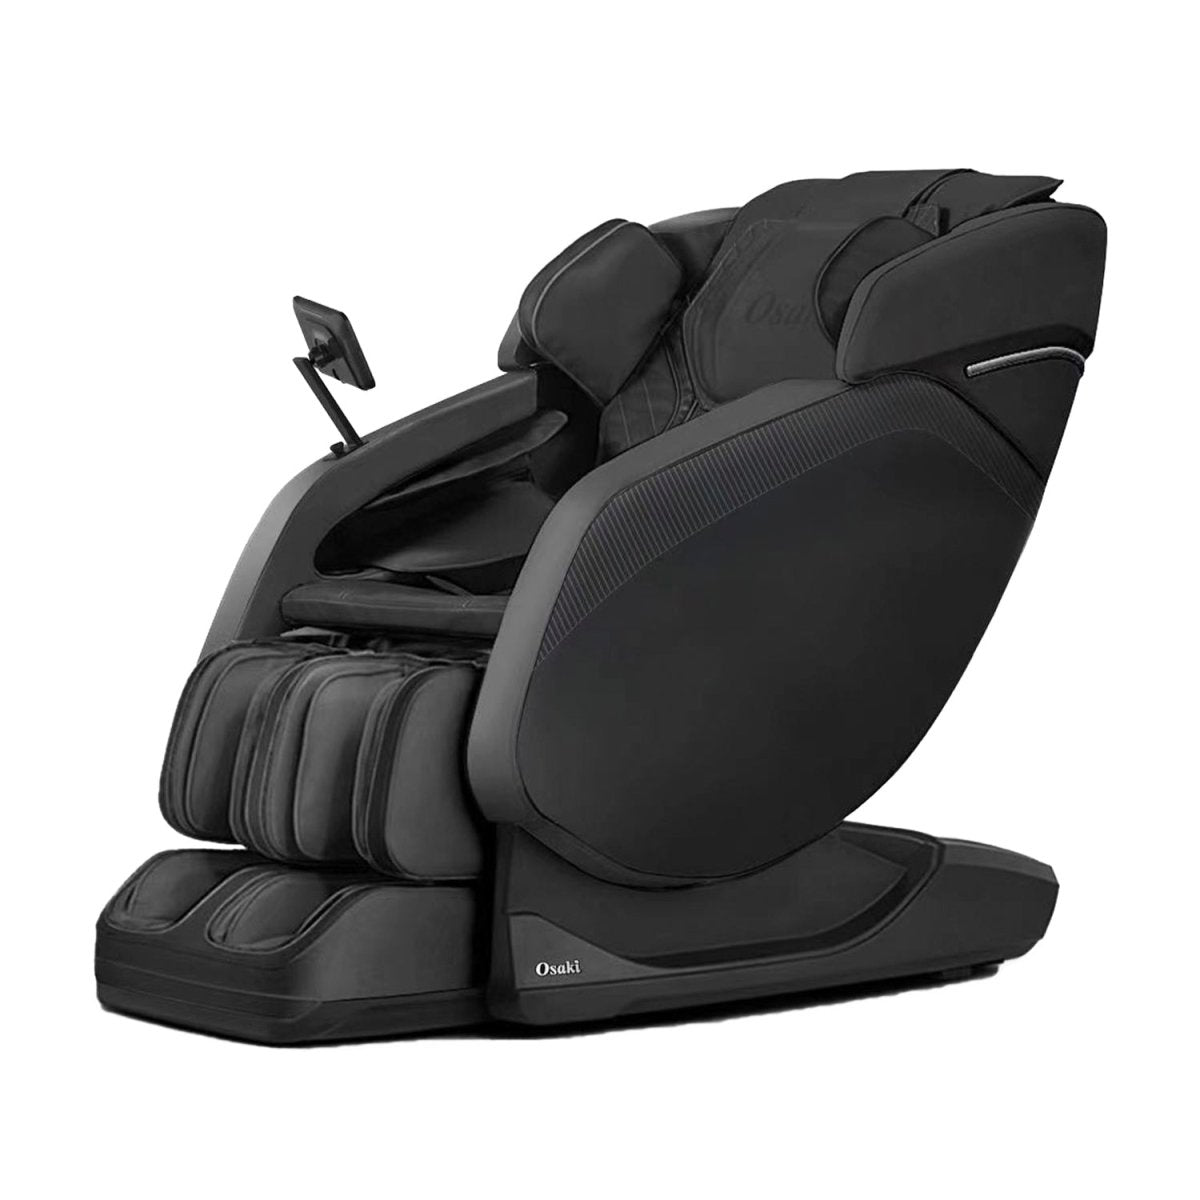 OsakiMassage ChairOsaki JP-650 3D Massage ChairBlackMassage Chair Heaven